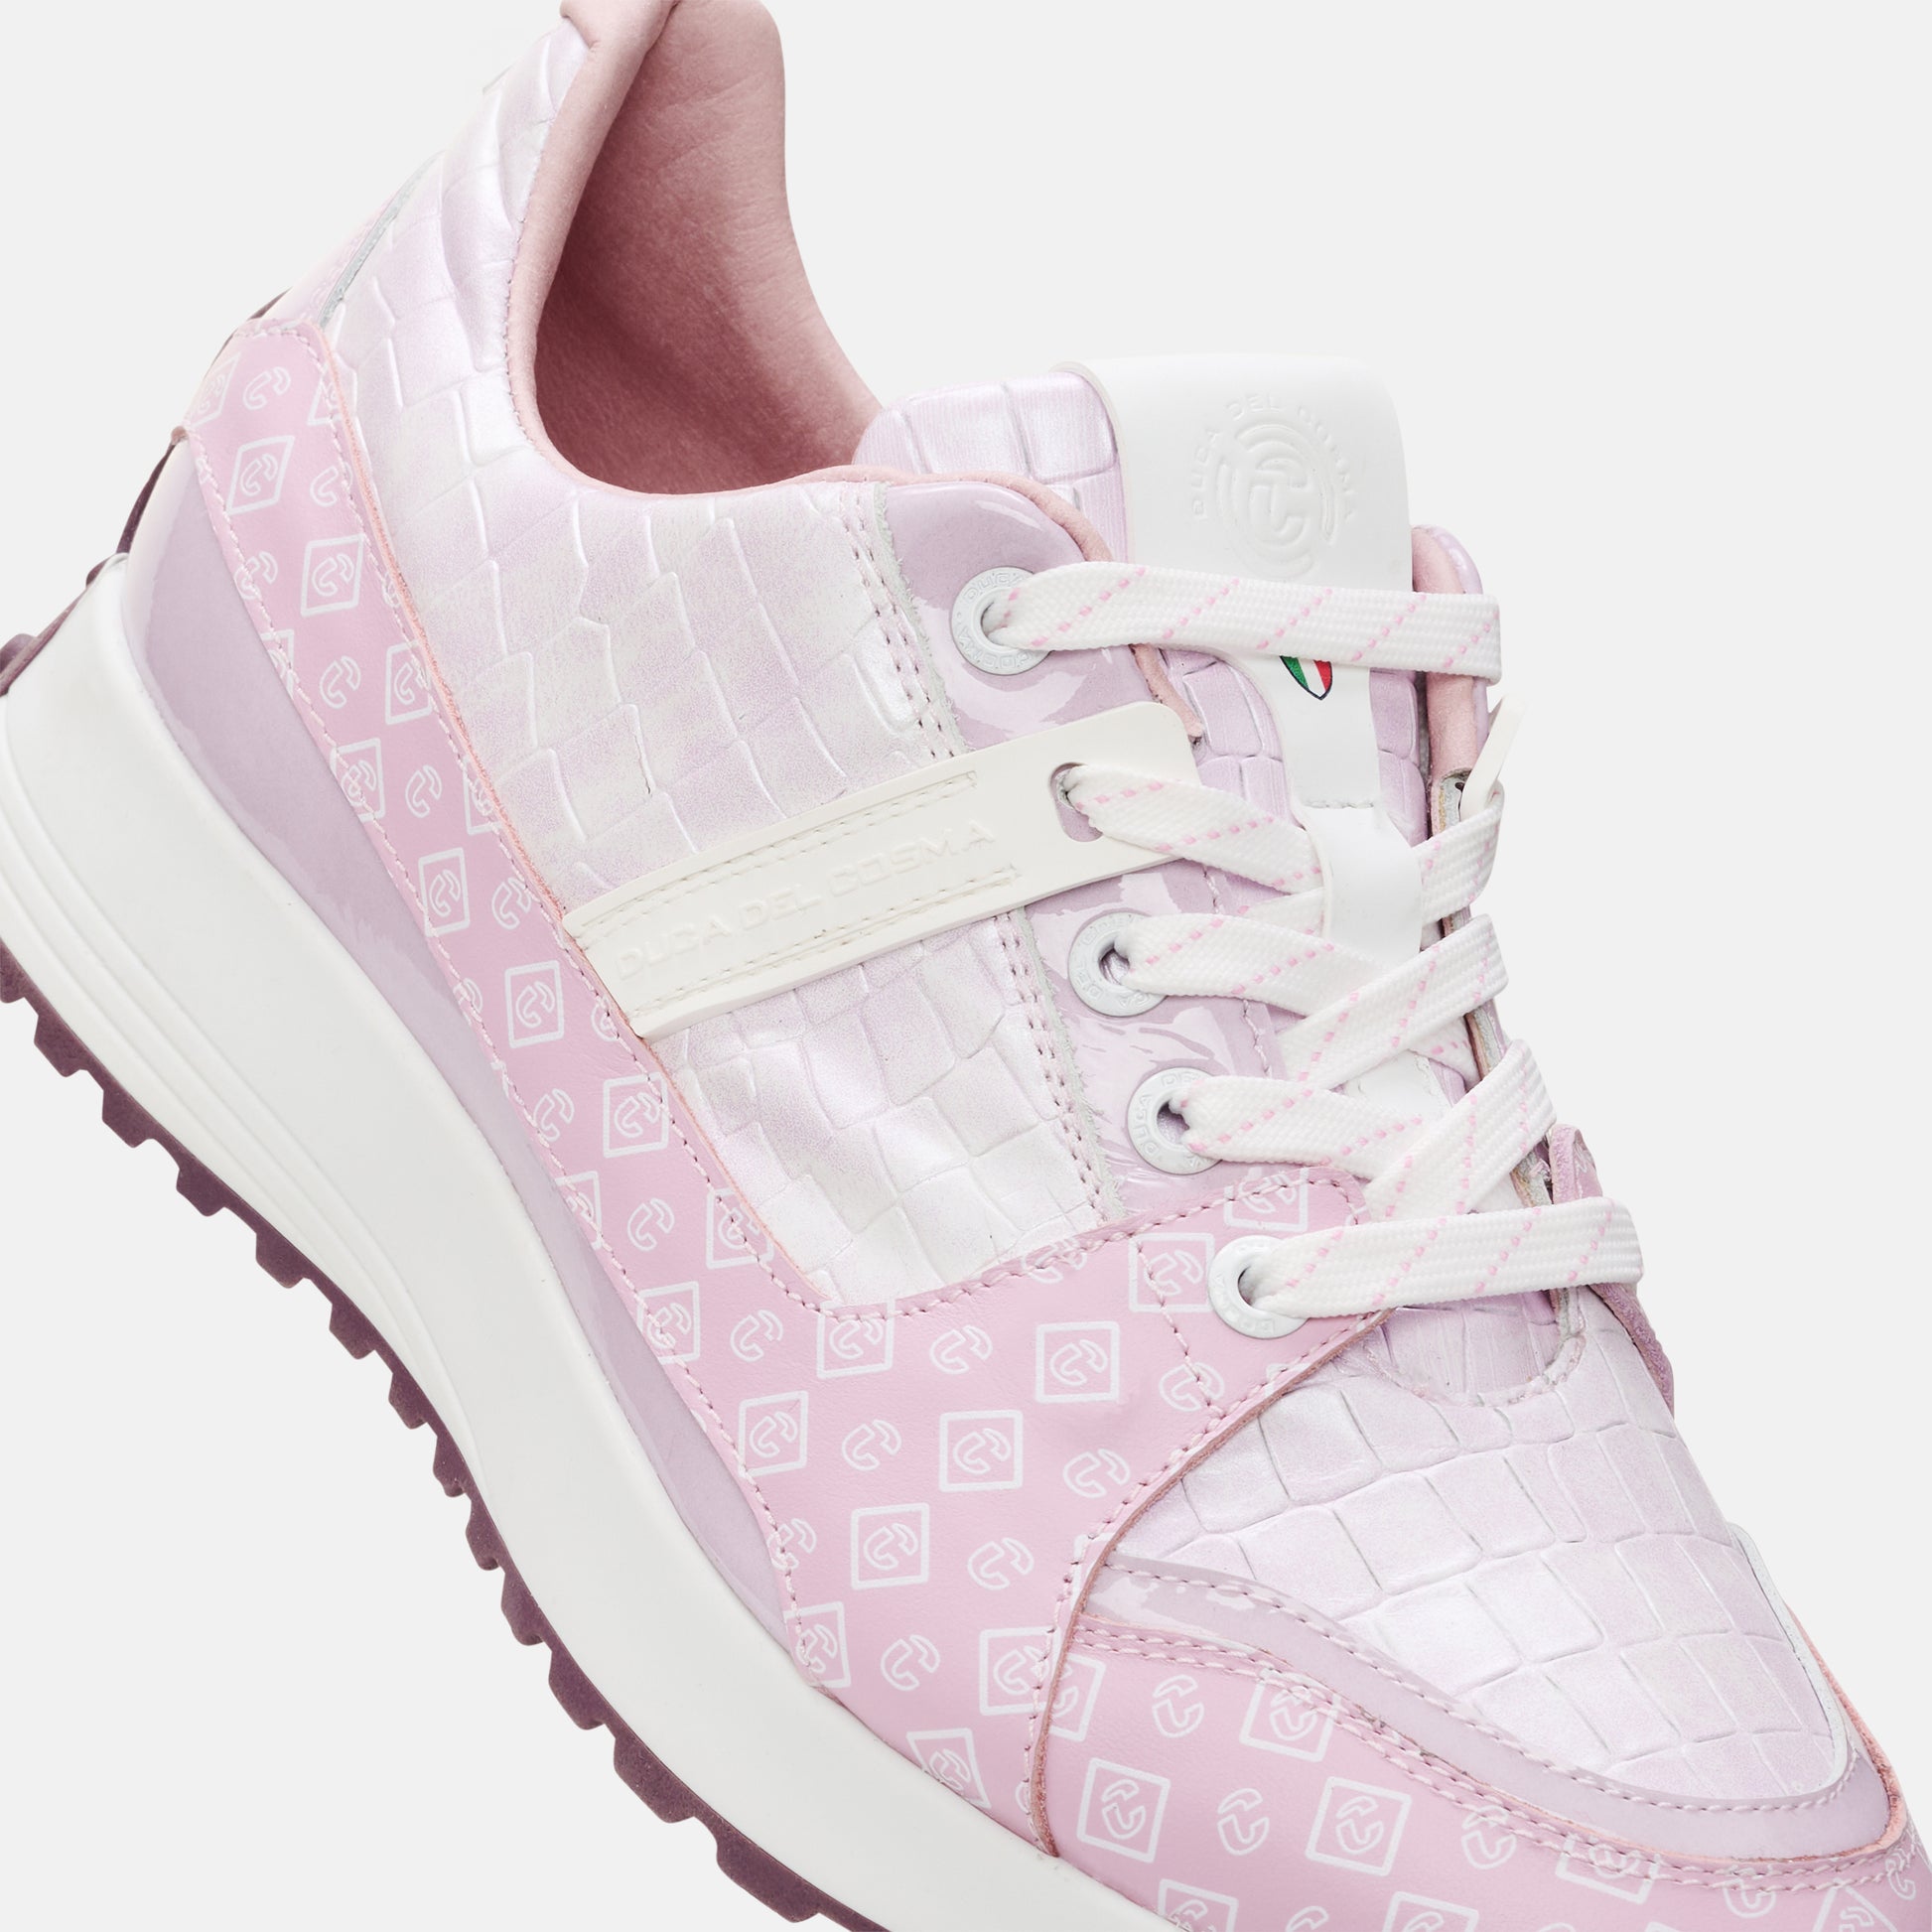 Waterproof Golf Shoe, Pink Golf Shoes, Lightweight Golf Shoes, Spikeless Golf Shoes, Duca del Cosma Women's Golf Shoes.